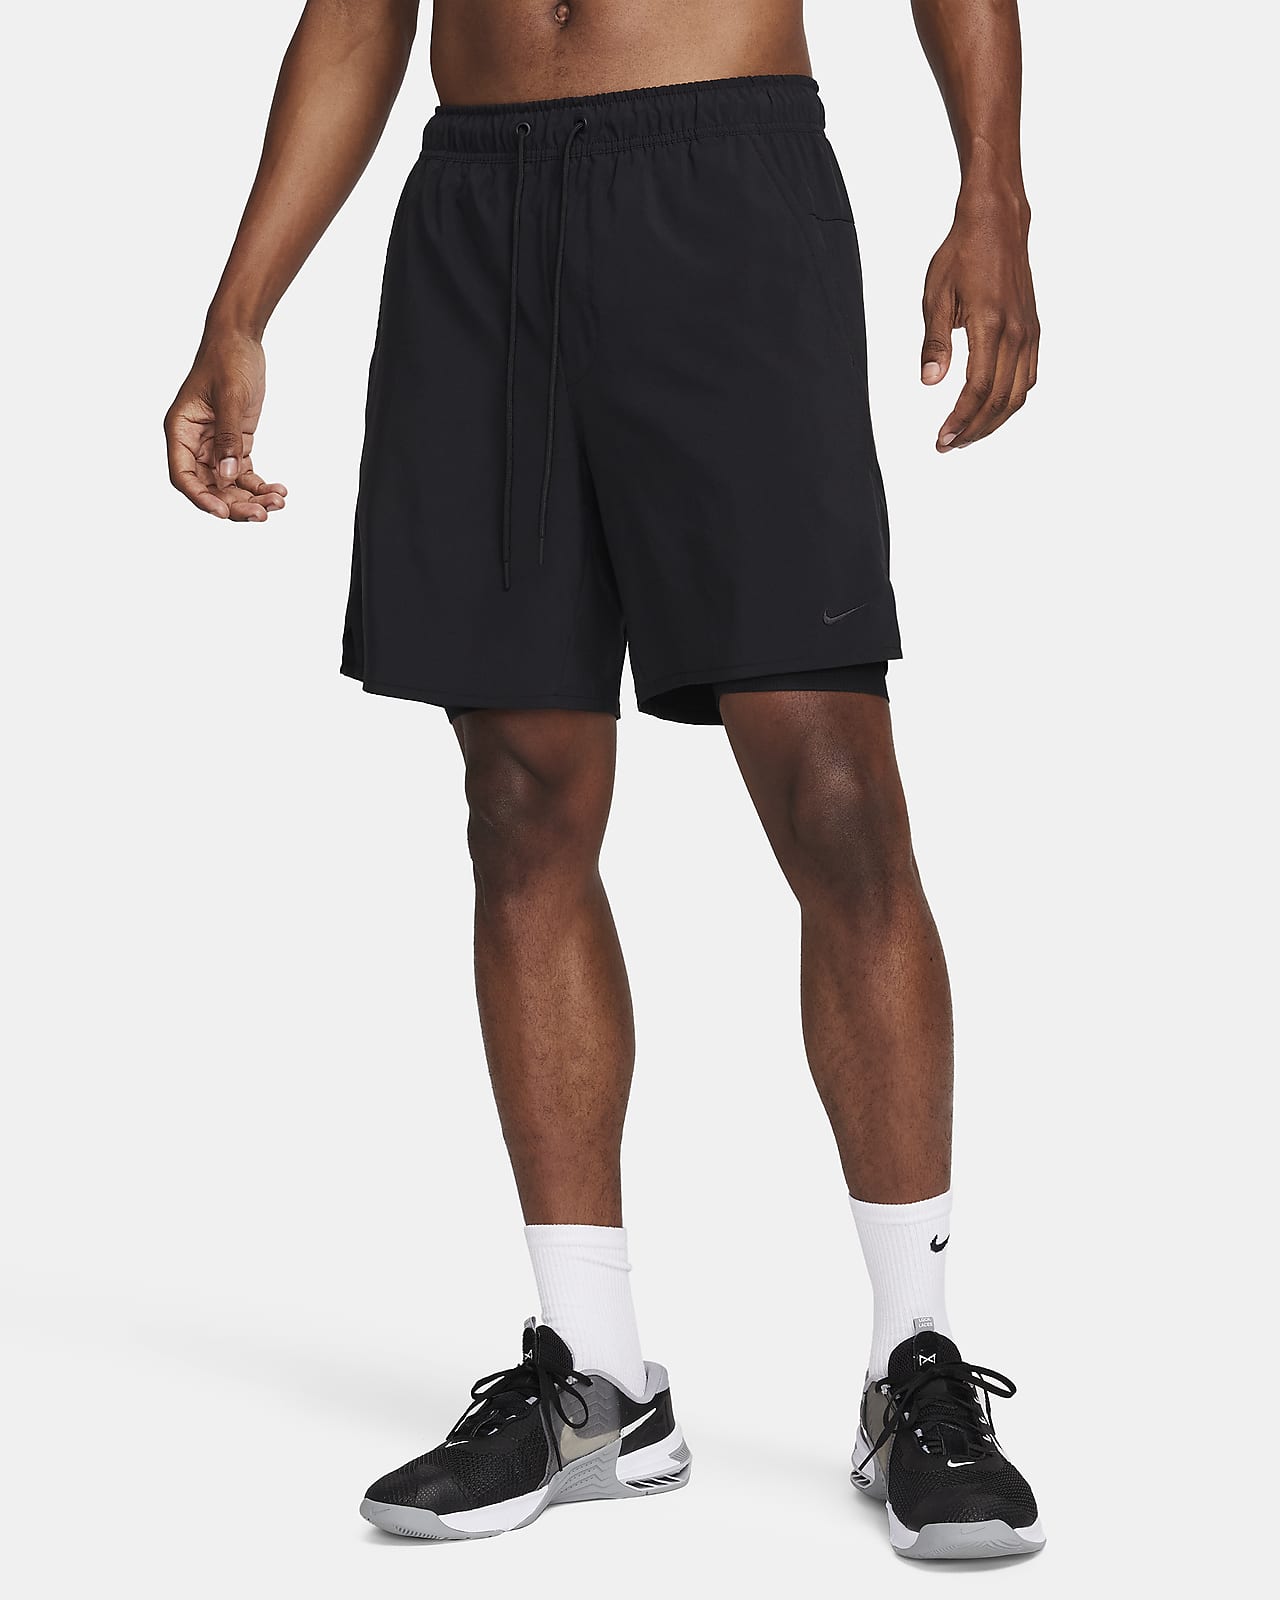 Nike Unlimited Pantalón corto versátil Dri-FIT 2 en 1 de 18 cm - Hombre